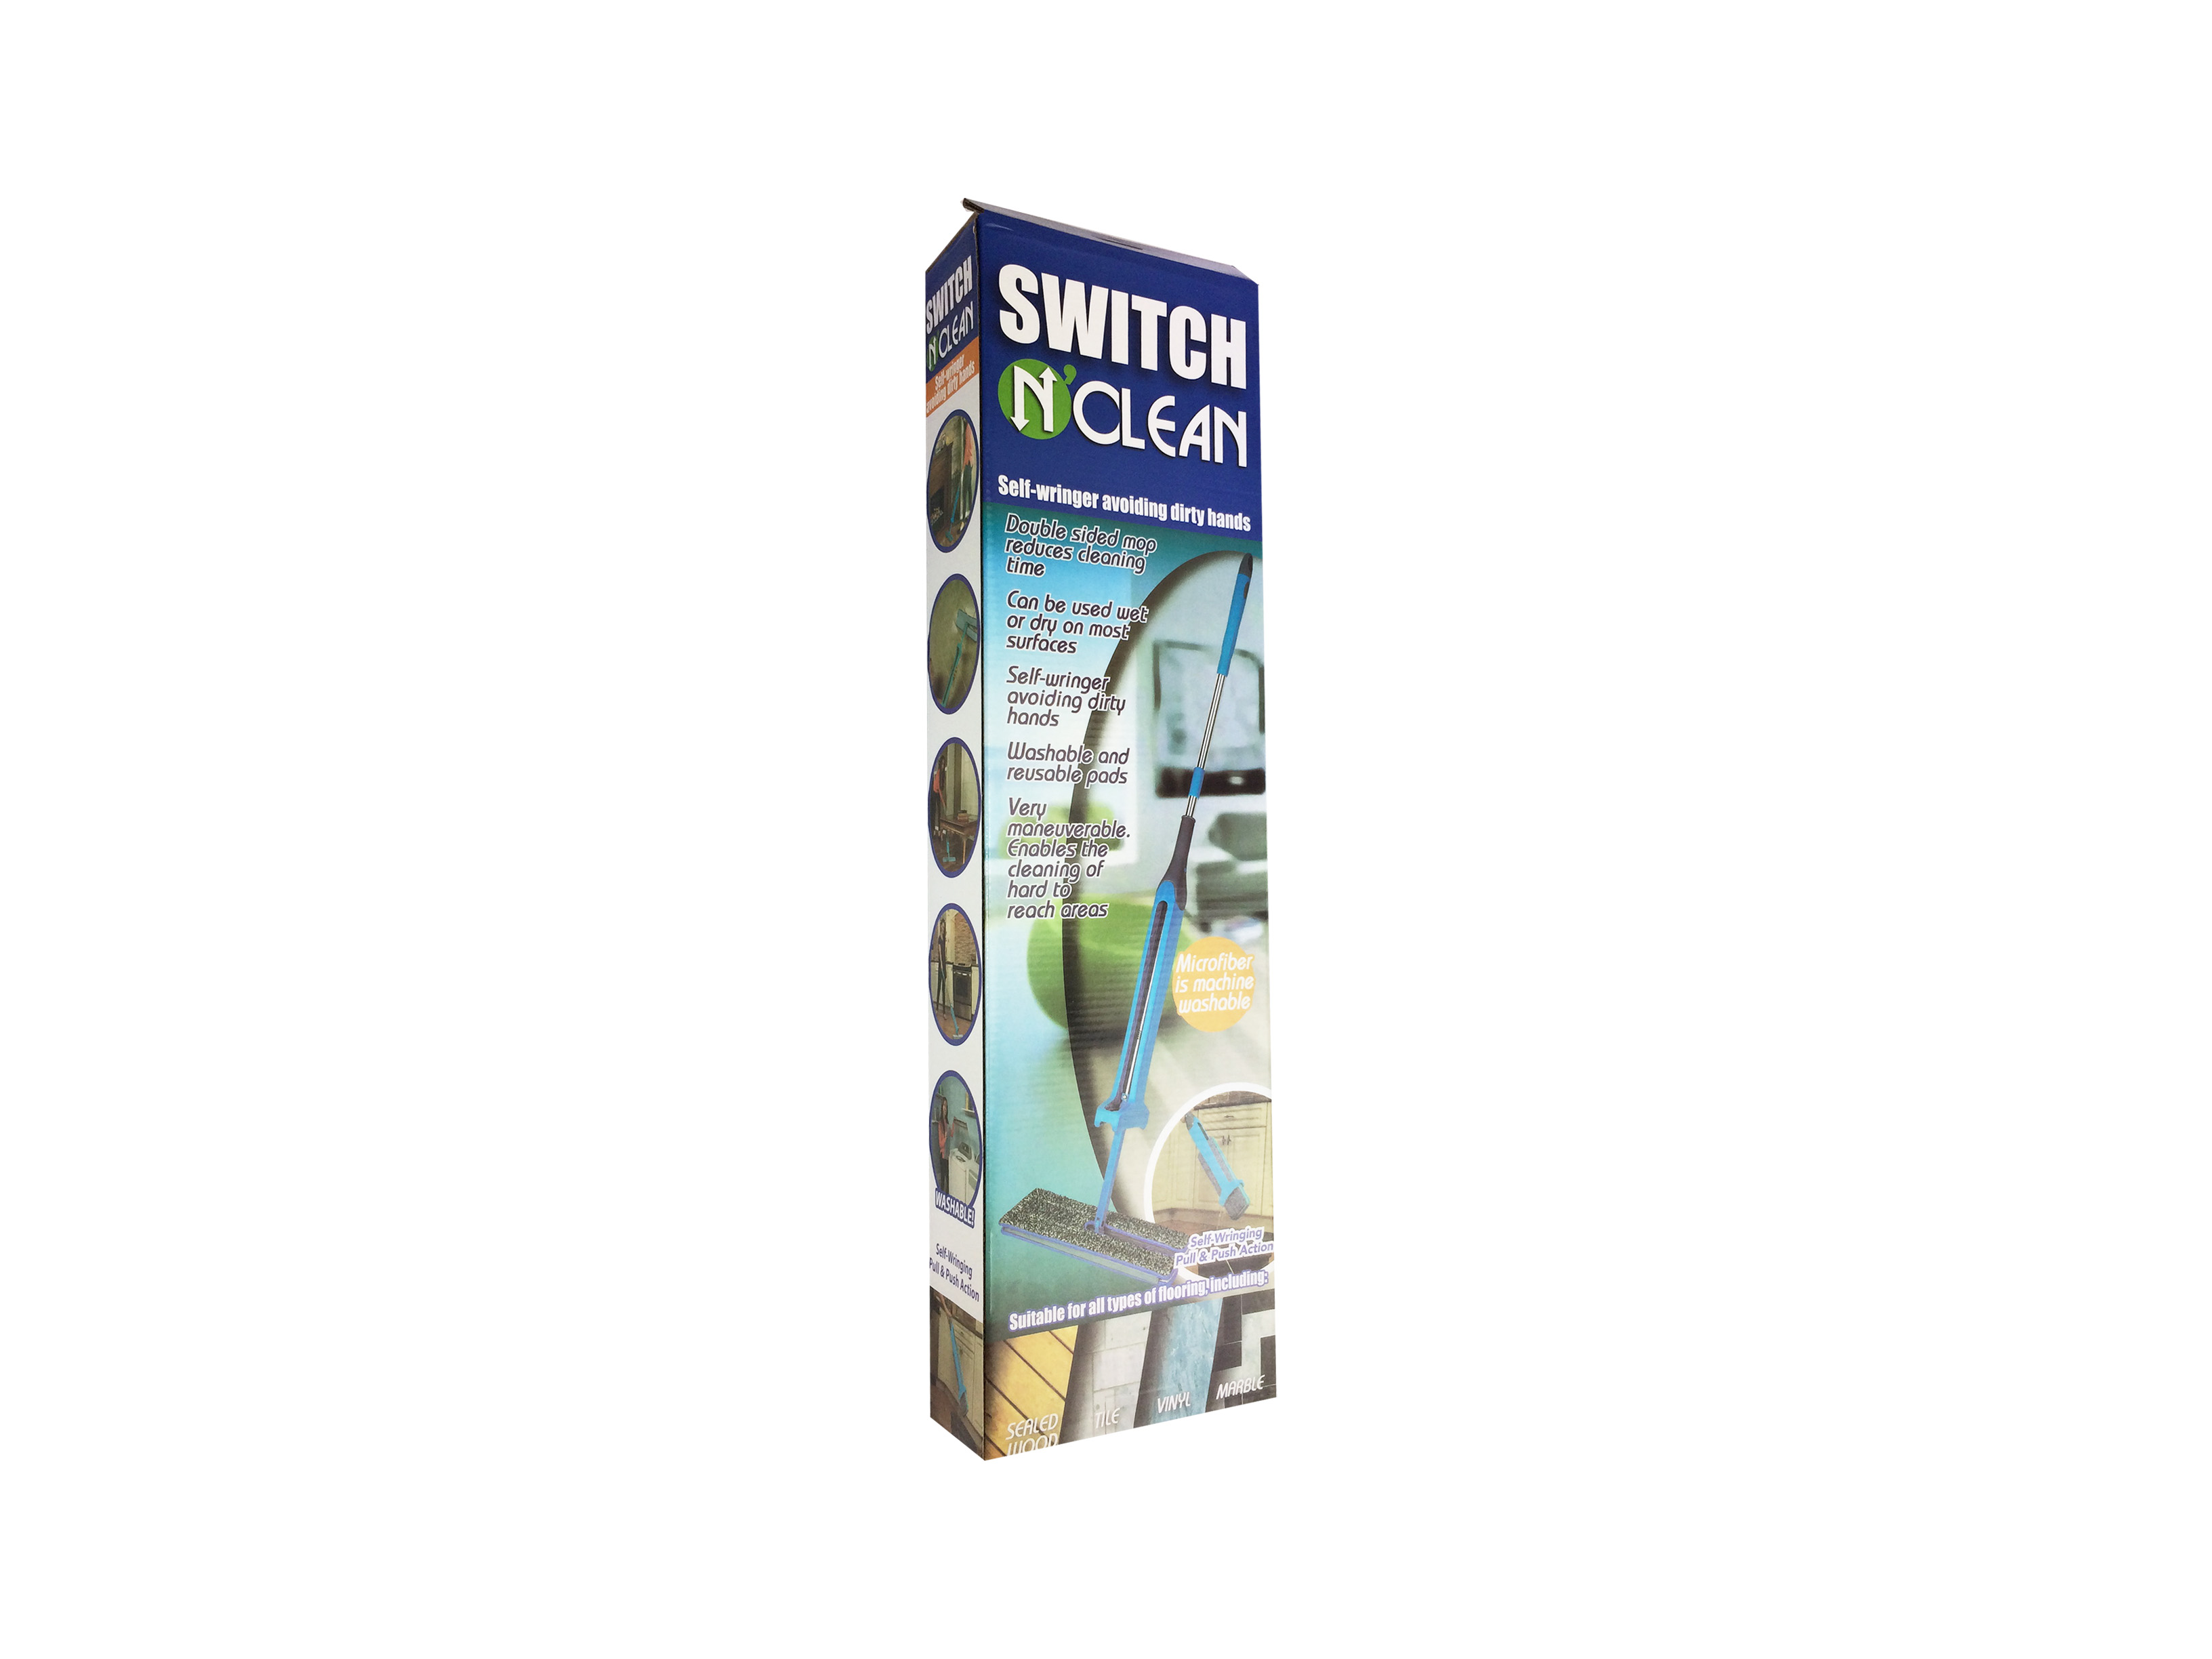 Самоотжимающаяся швабра Switch N Clean оптом